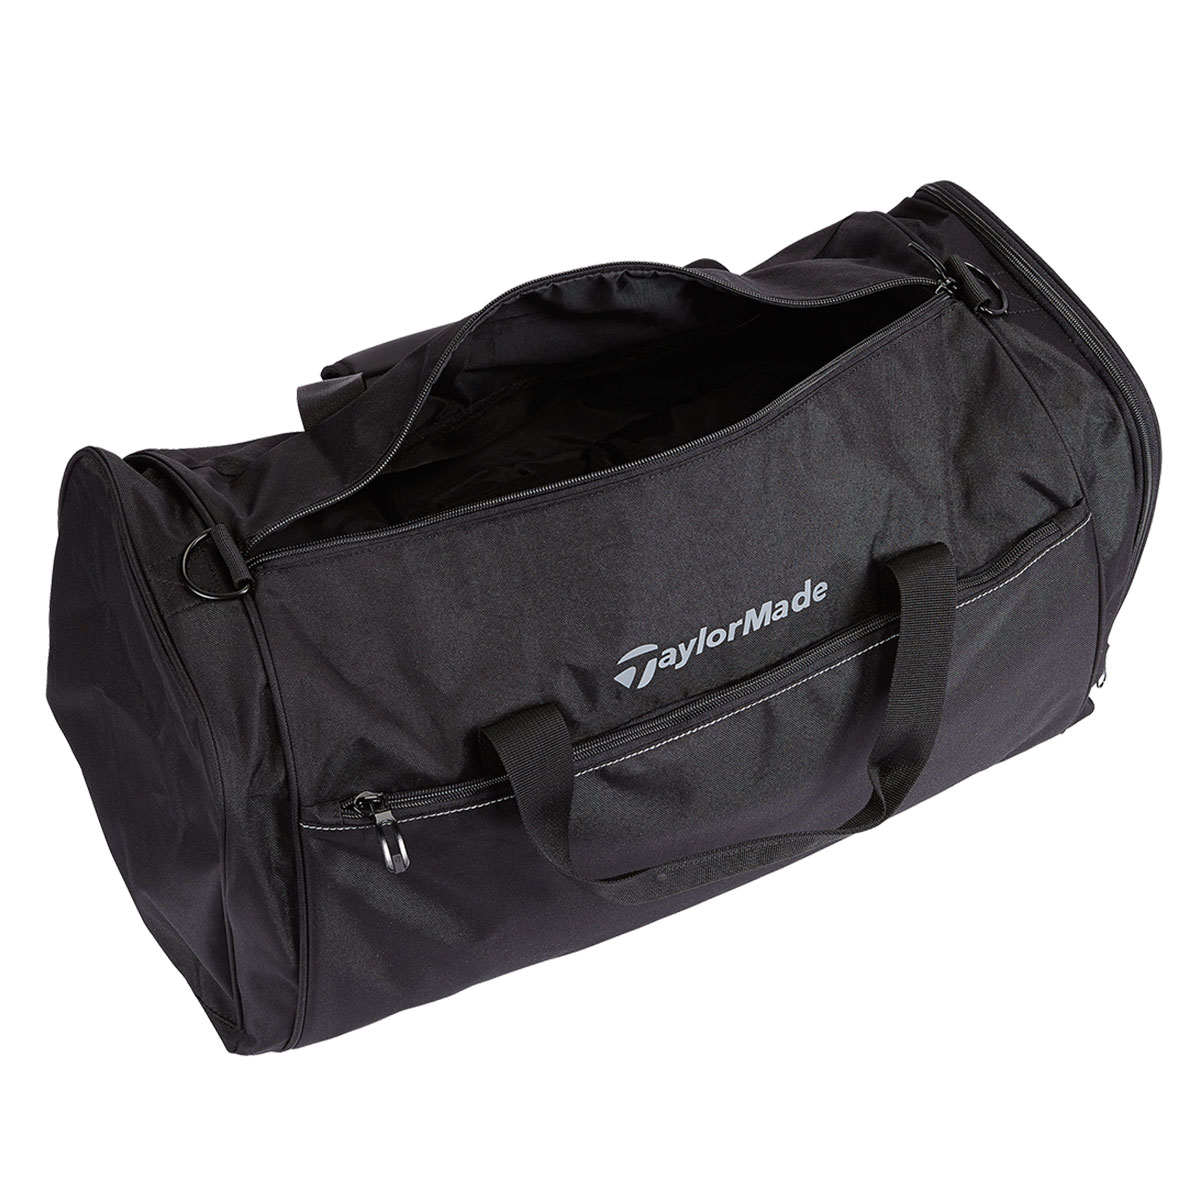 TaylorMade Performance Medium Duffle Bag from american golf